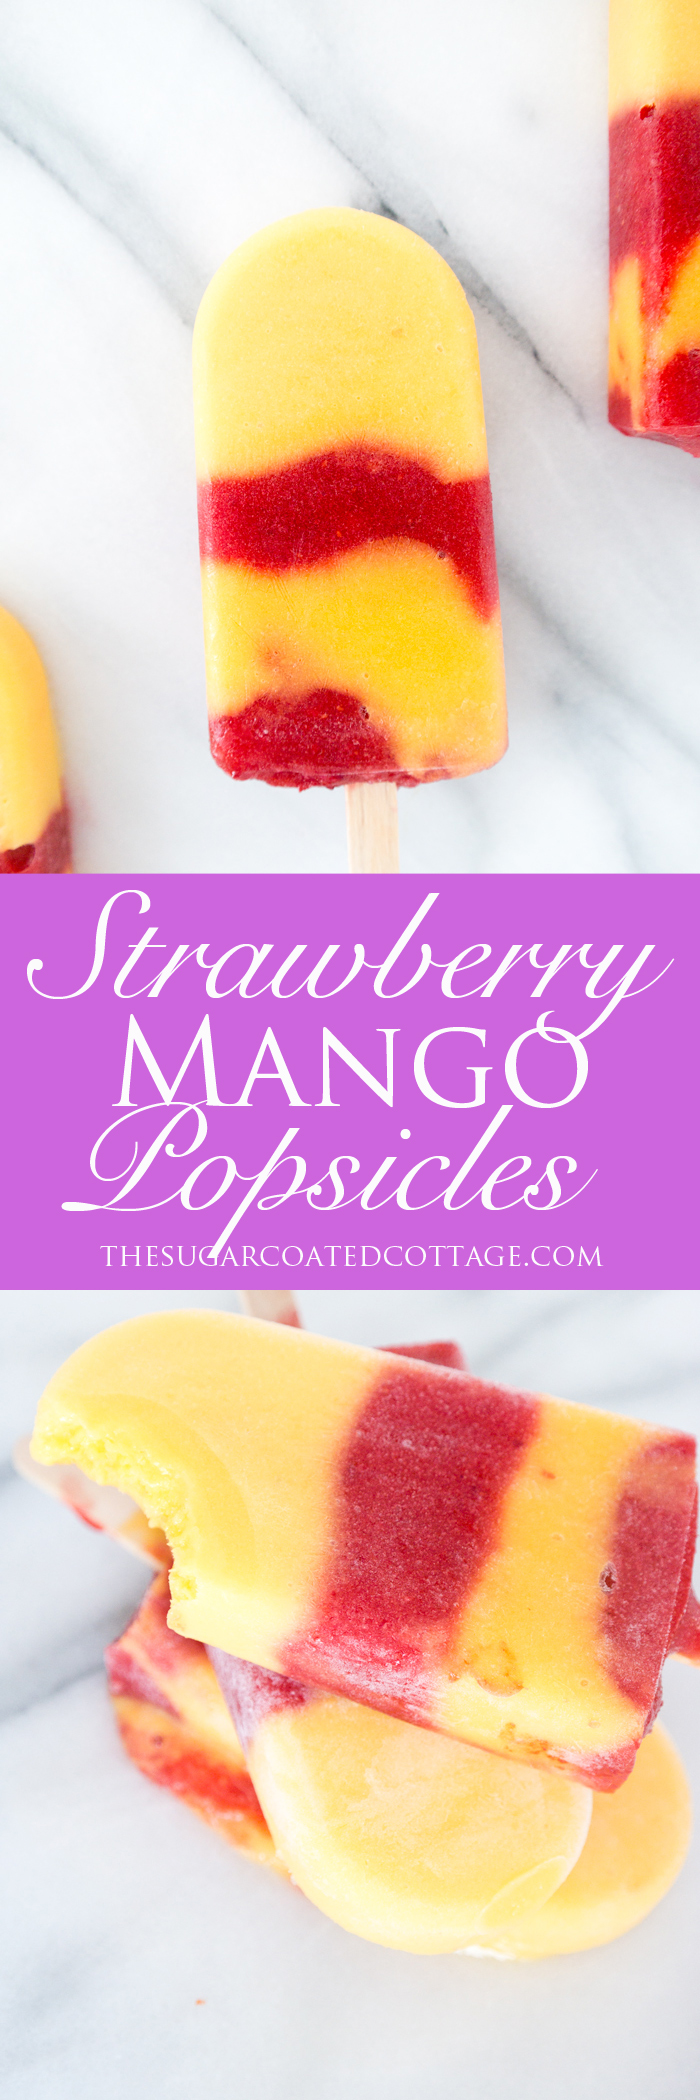 3 Ingredient Strawberry Mango Popsicles